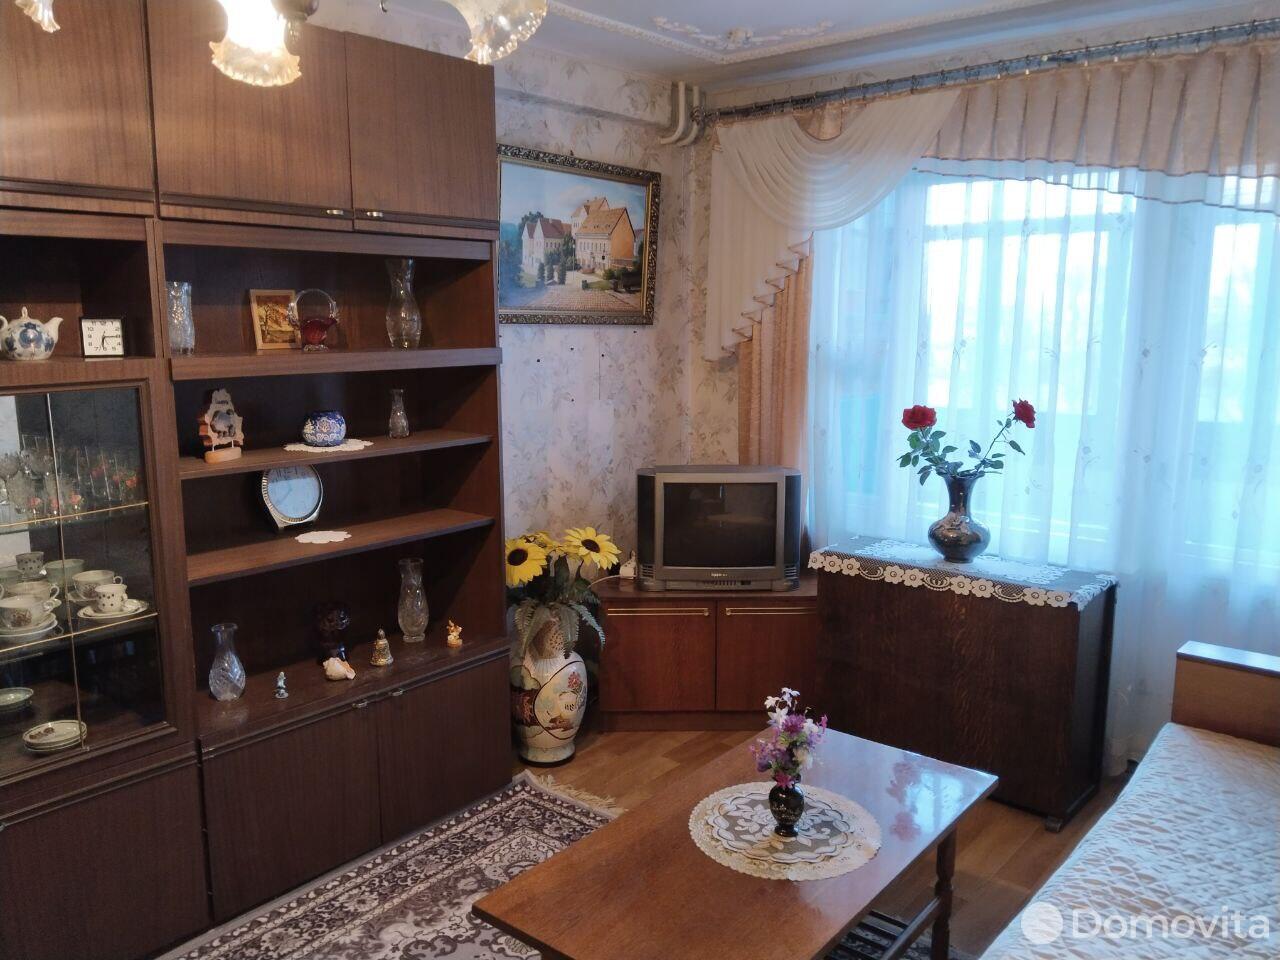 квартира, Минск, ул. Асаналиева, д. 24, стоимость аренды 814 р./мес.